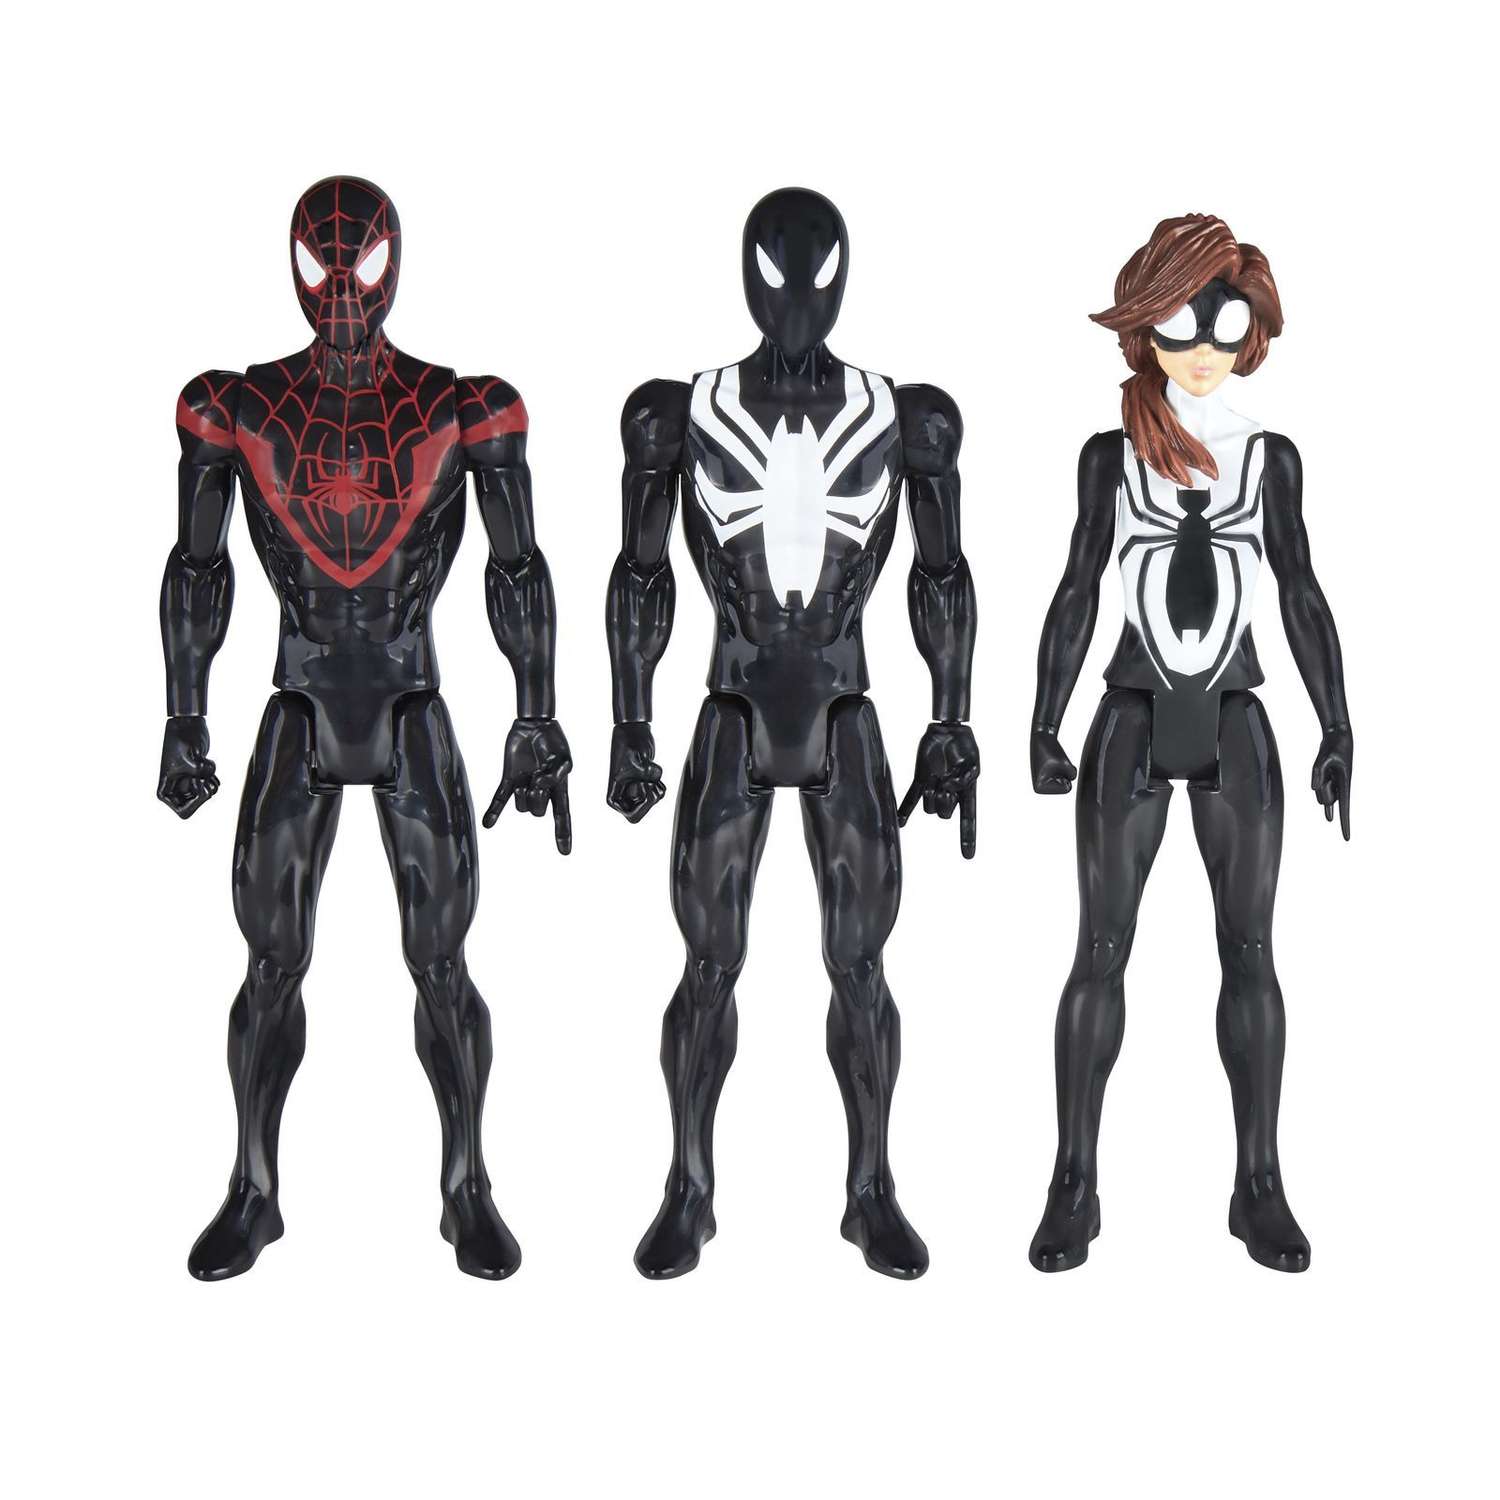 Фигурка Человек-Паук (Spider-man) (SM) Power pack Человек-паук в ассортименте E2324EU4 - фото 22